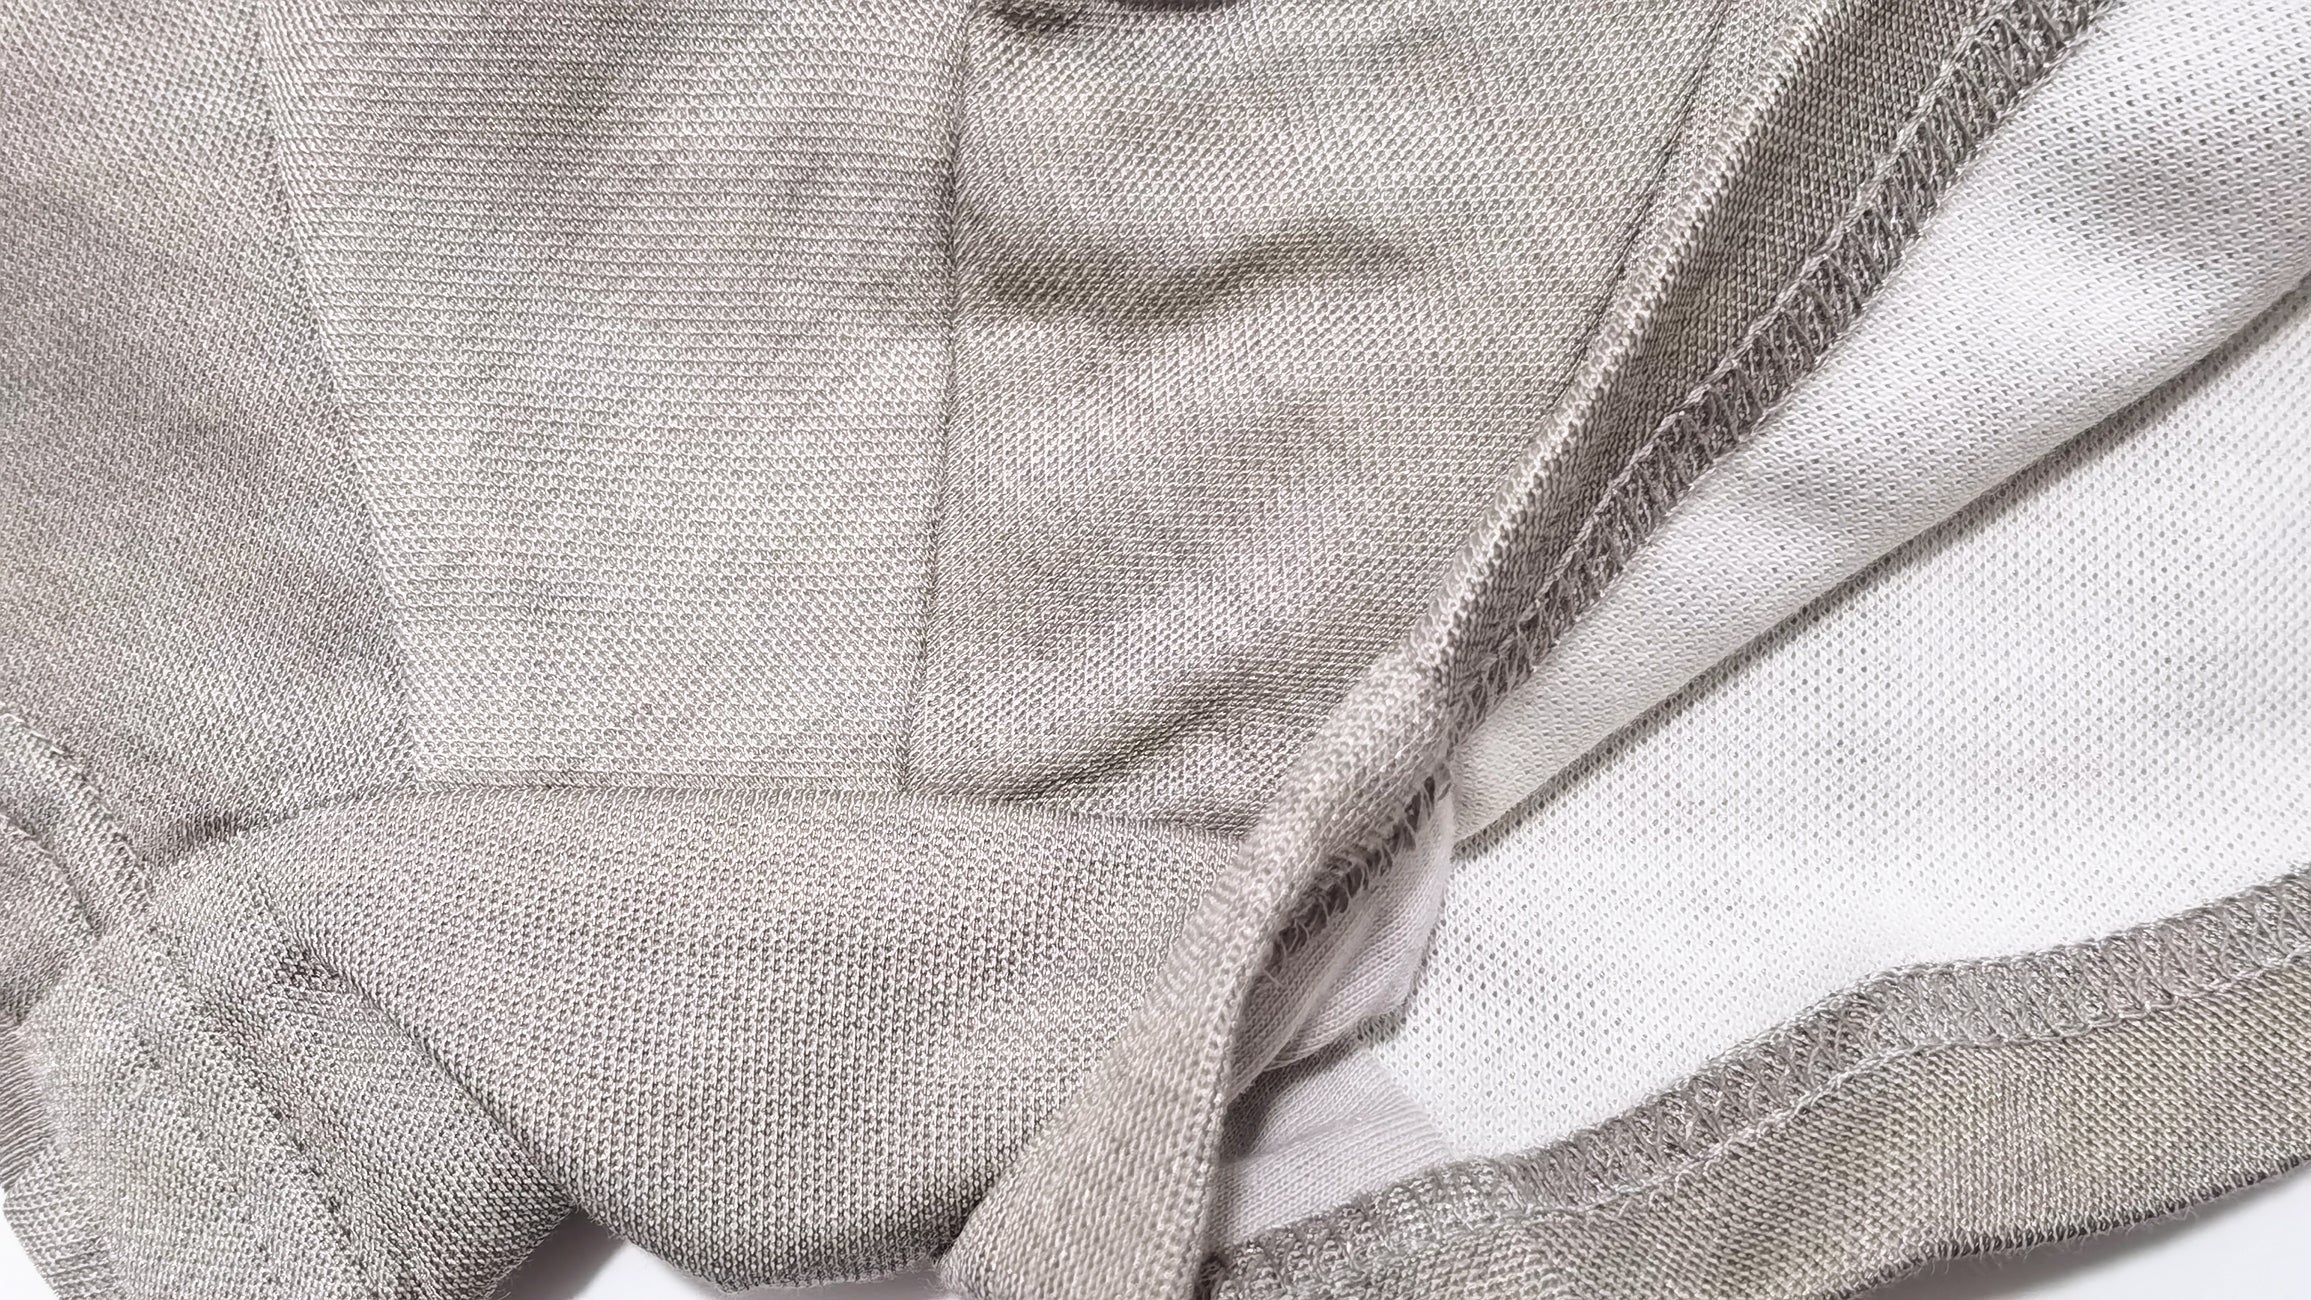 Unisex Underwear Boxer Briefs-Anti-Radiation RF EMF Protection Shorts –  Amradield